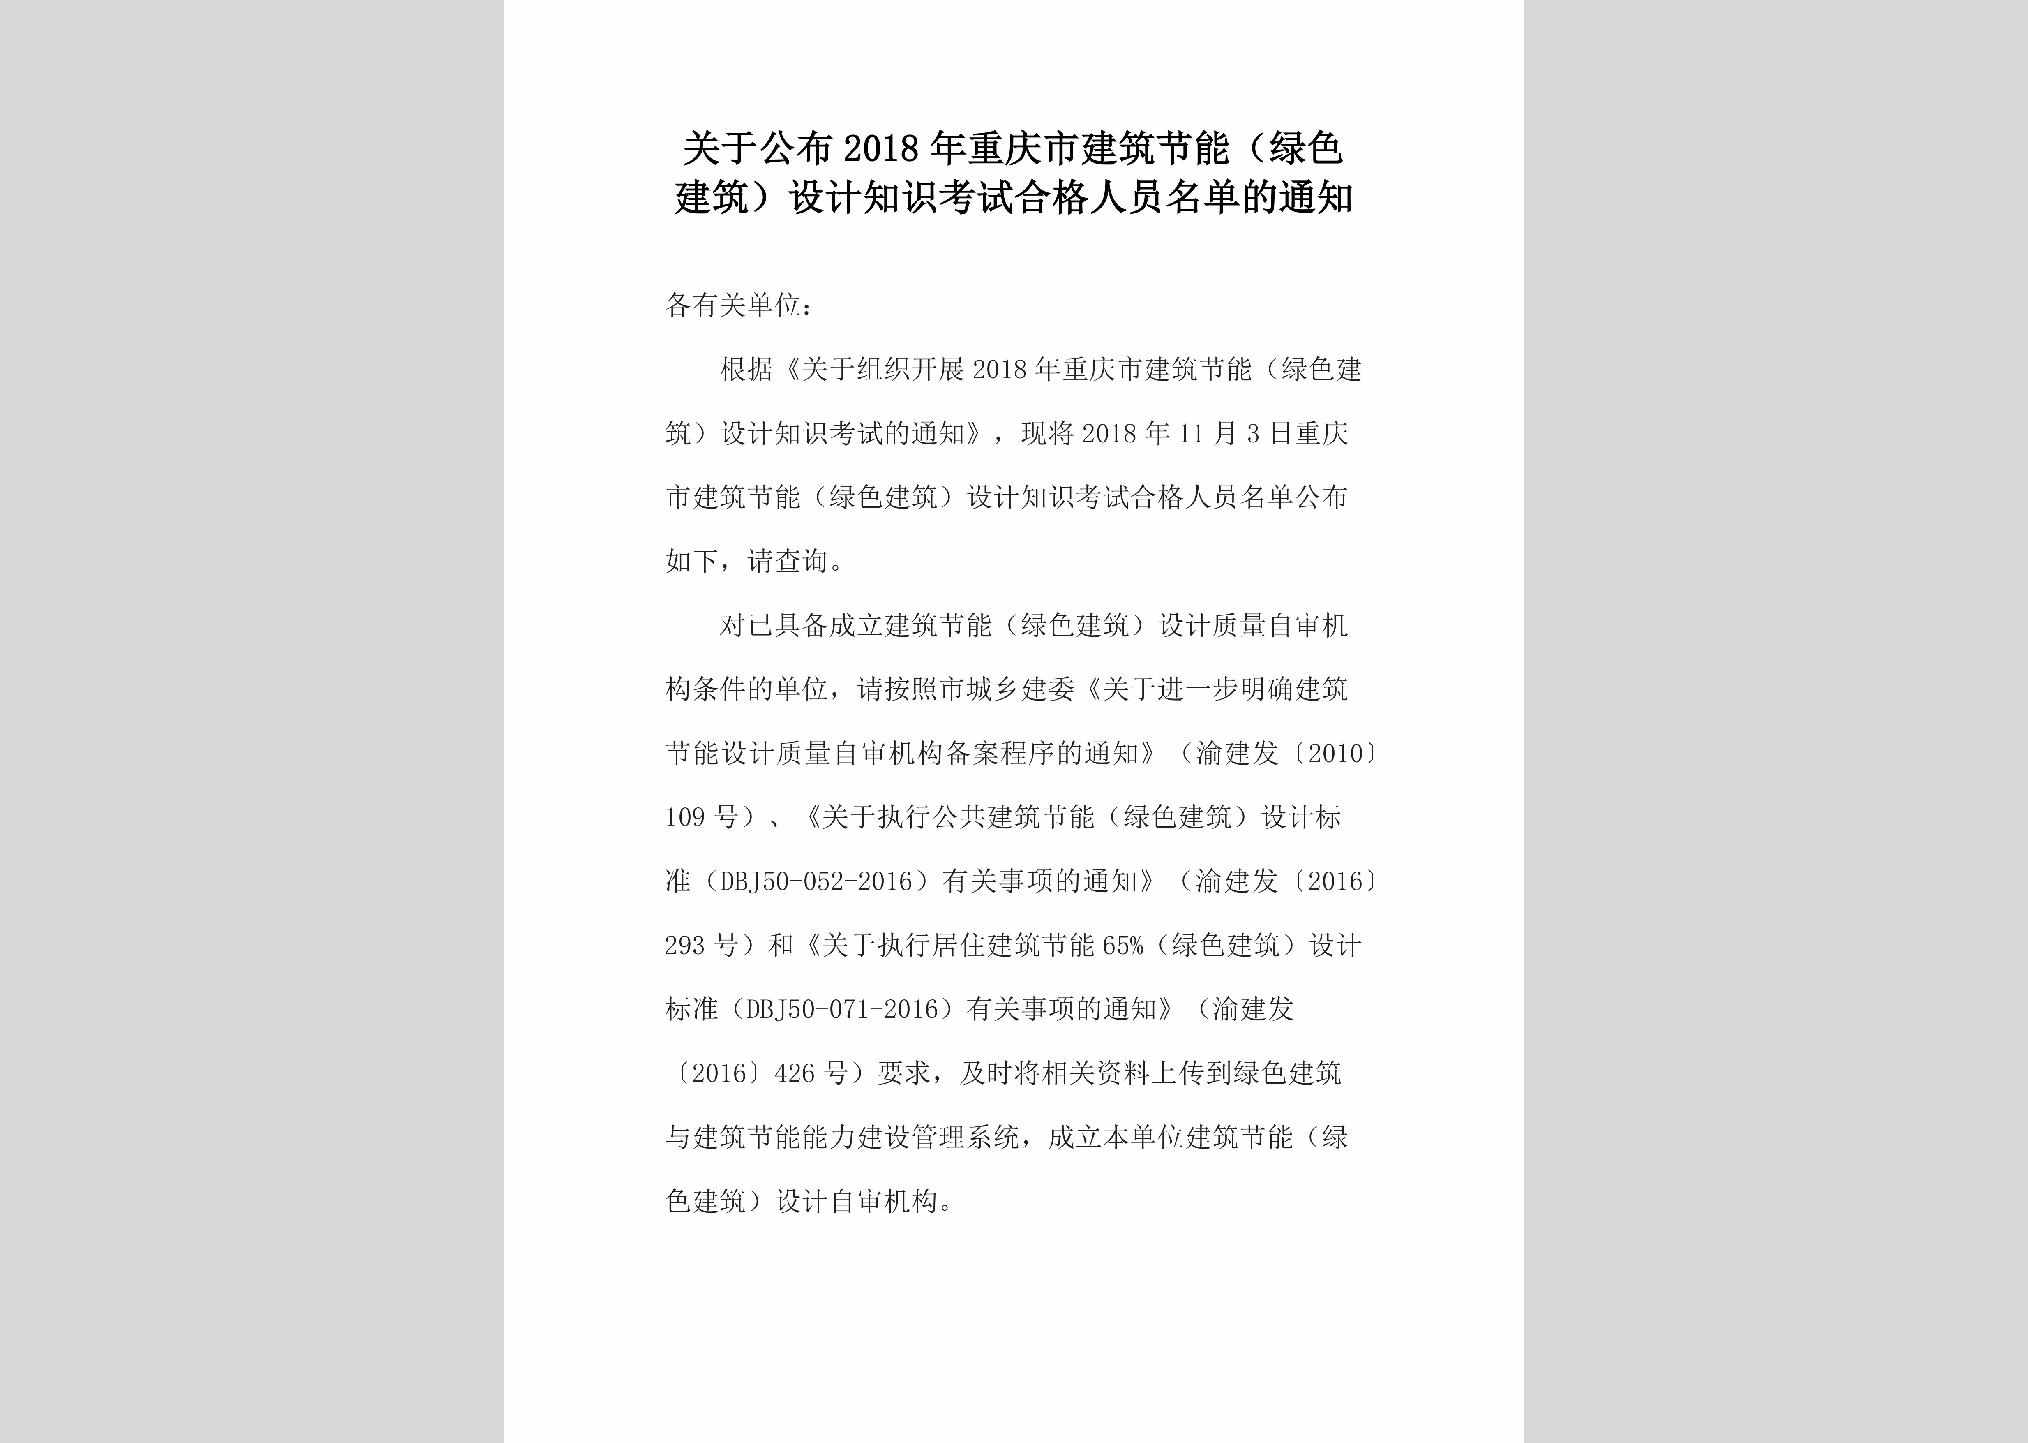 CQ-JZJNLSJZ-2018：关于公布2018年重庆市建筑节能（绿色建筑）设计知识考试合格人员名单的通知